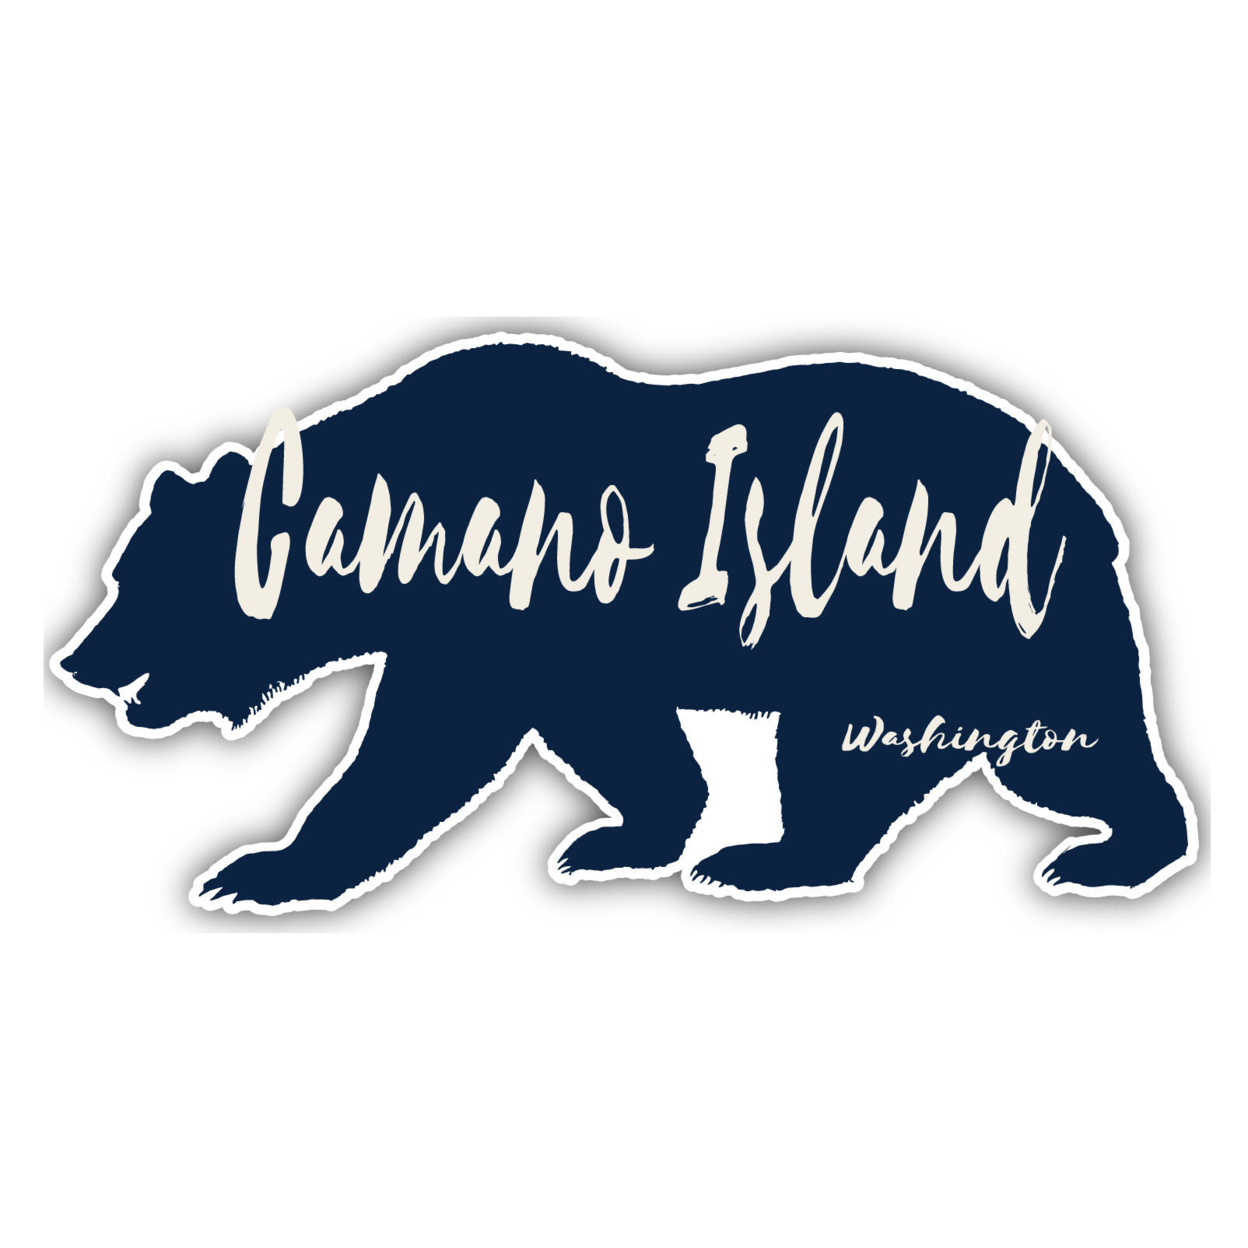 Camano Island Washington Souvenir Decorative Stickers (Choose Theme And Size) - 4-Pack, 10-Inch, Tent